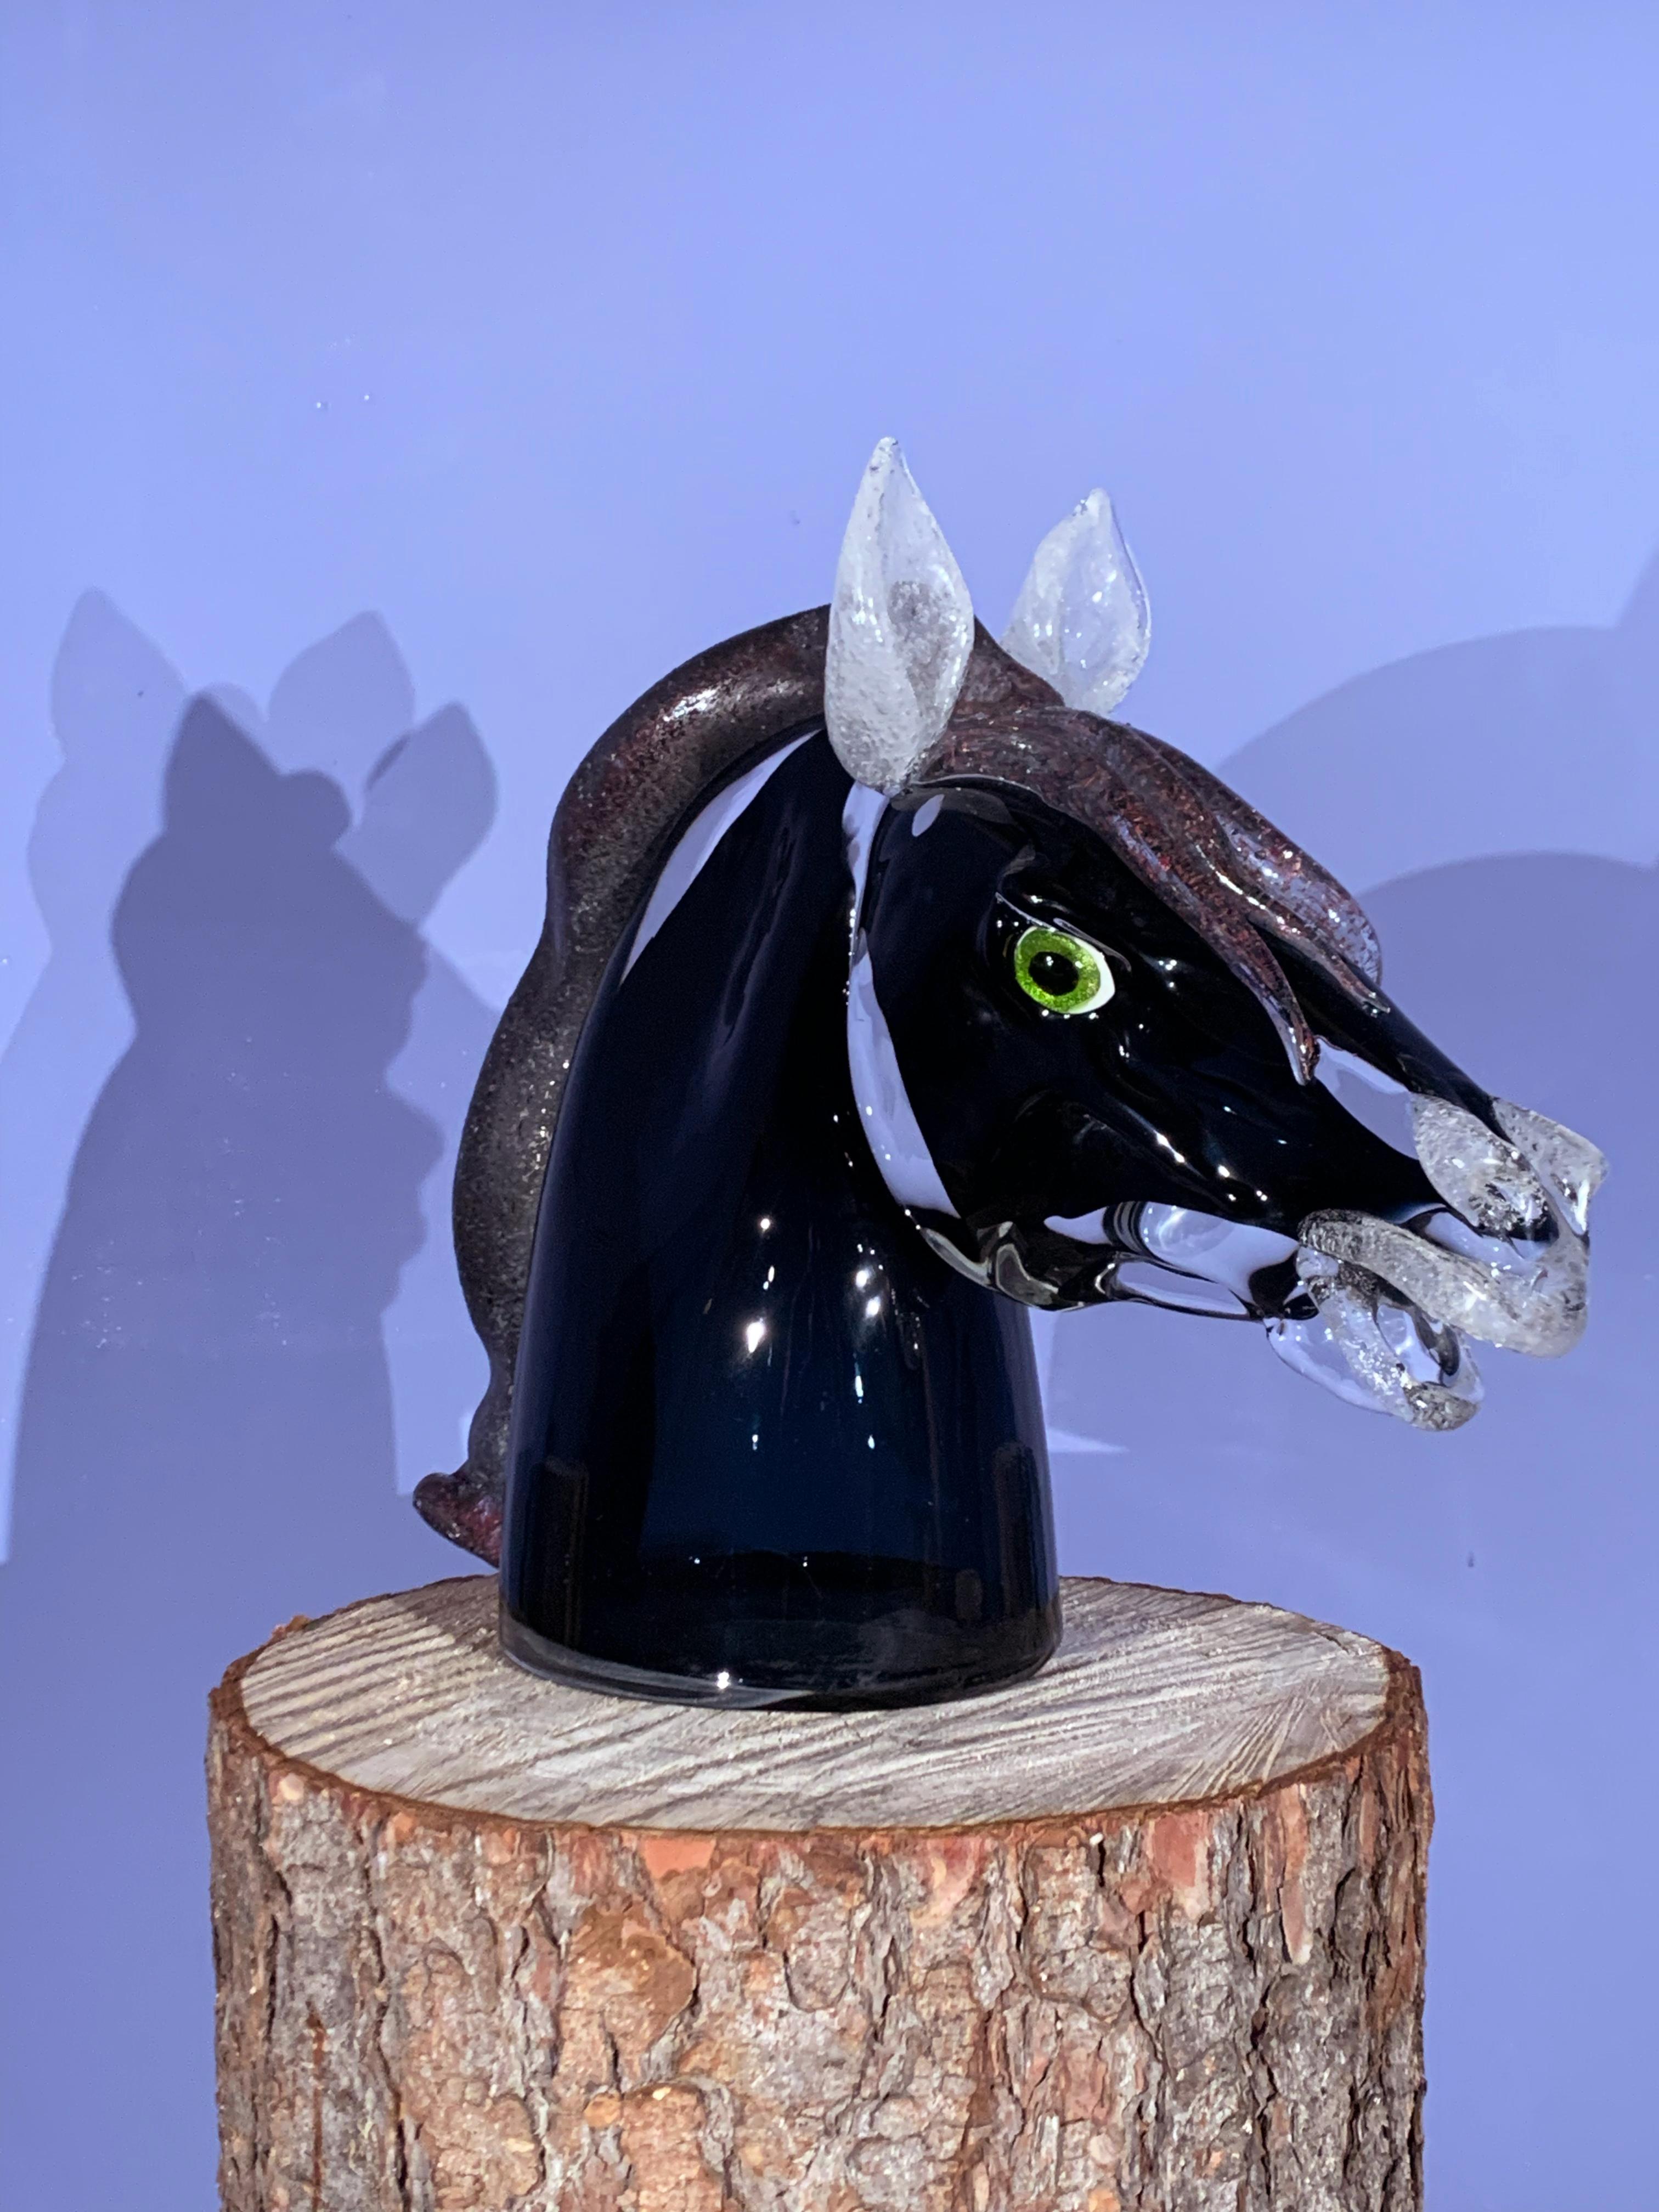 hugh findletar Figurative Sculpture - Horsehead